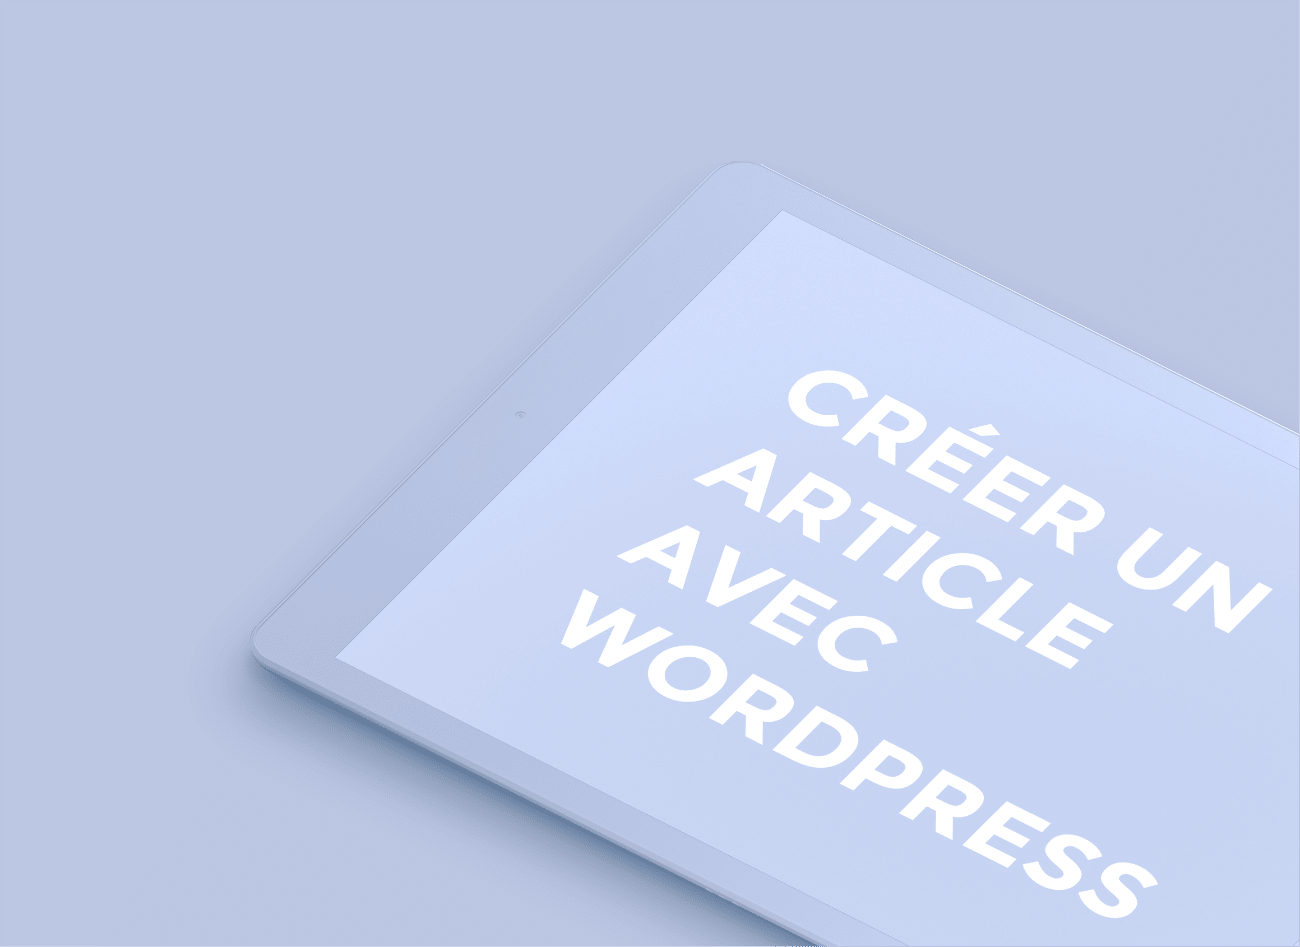 Créer un article avec WordPress